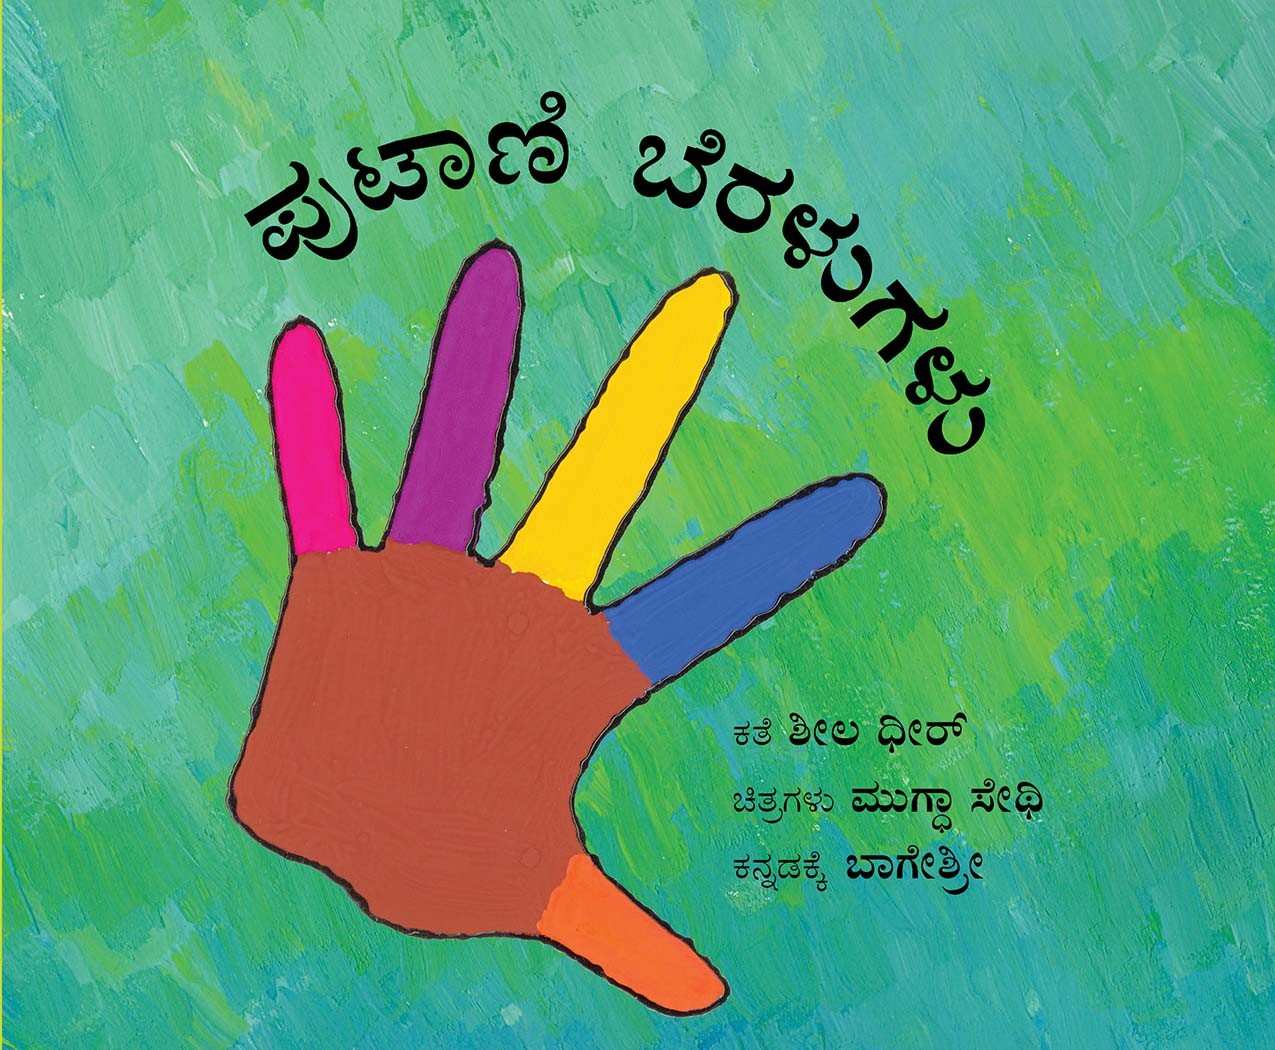 Little Fingers/Putaani Beralugalu (Kannada)